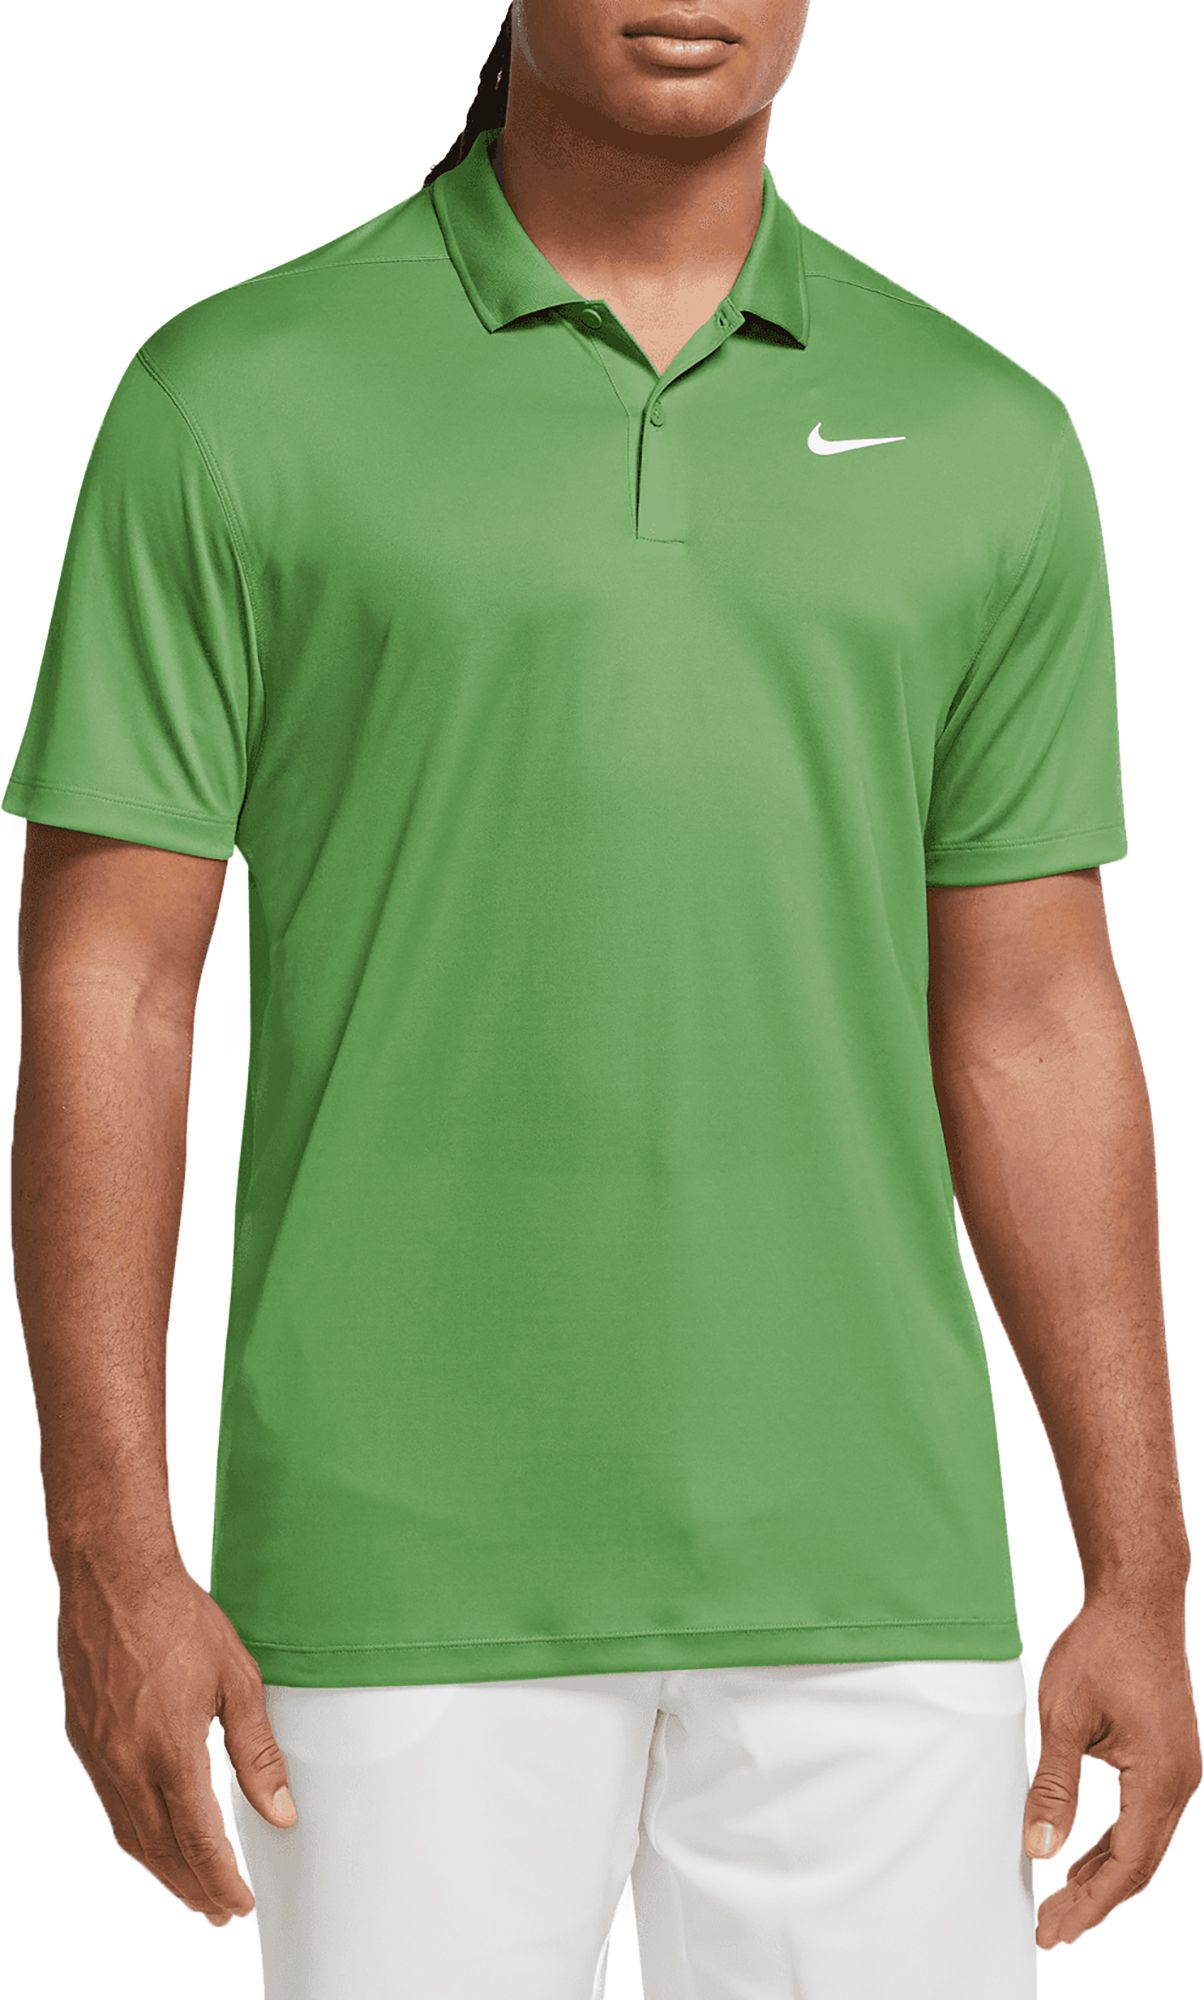 Nike Golf Polos & Shirts